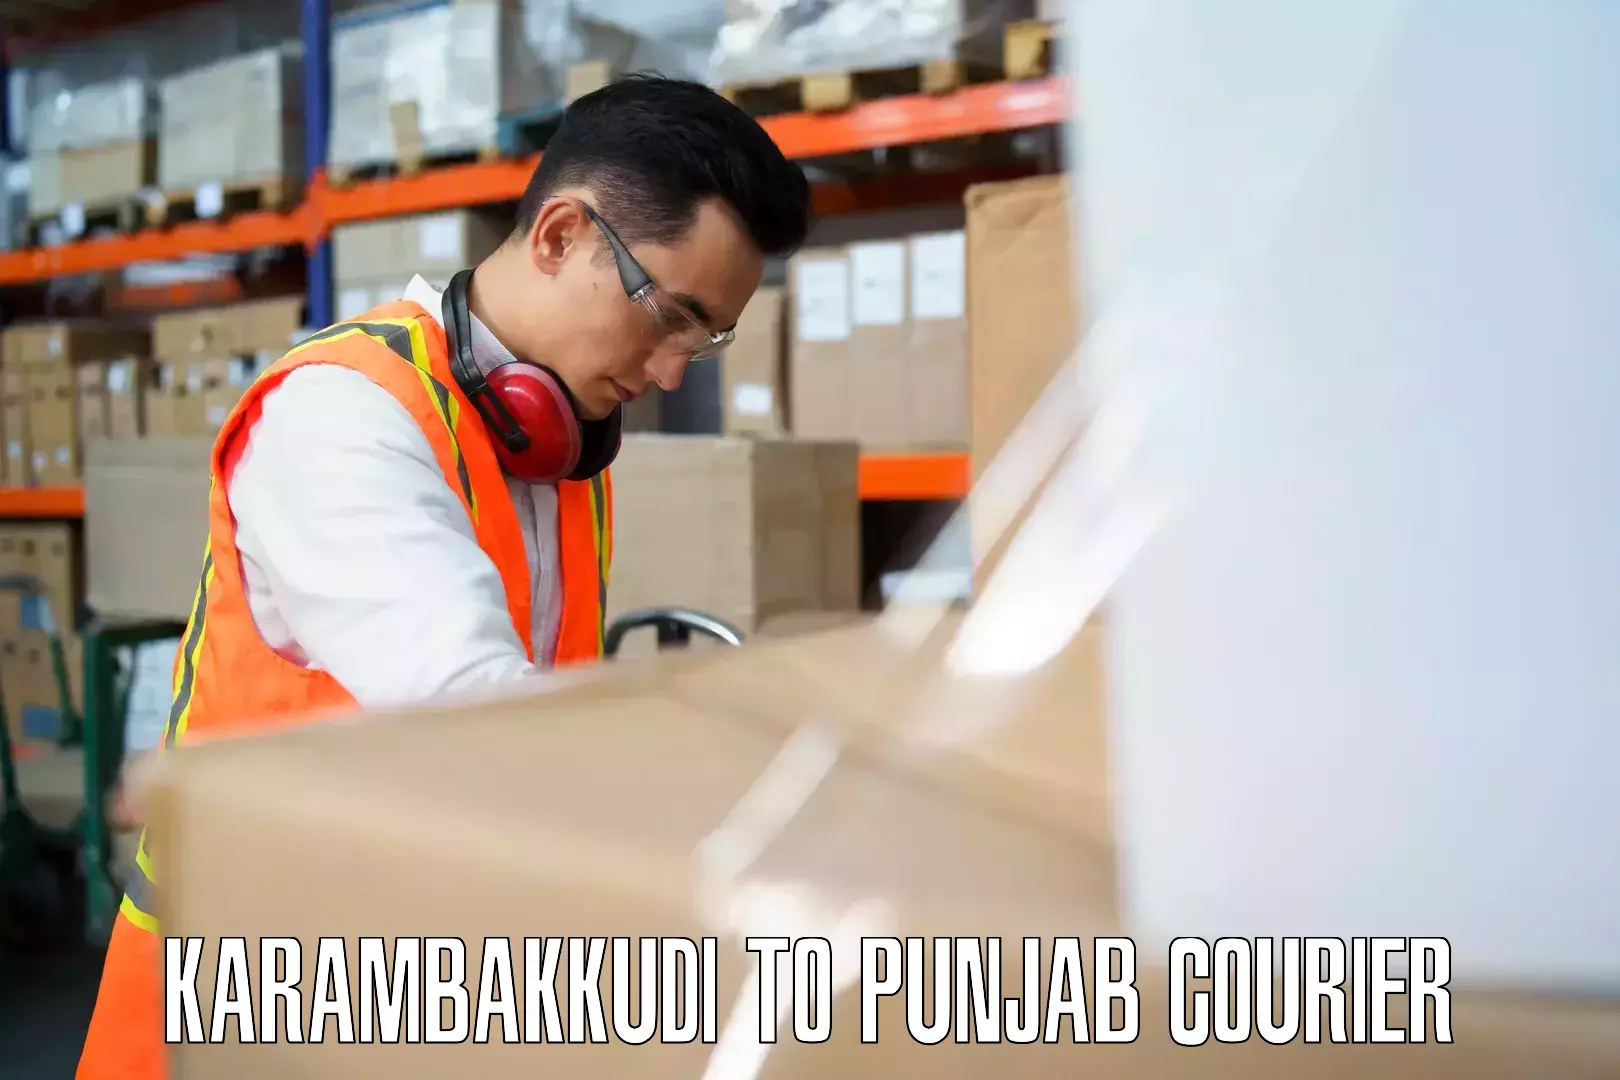 Luggage shipment specialists Karambakkudi to Ludhiana